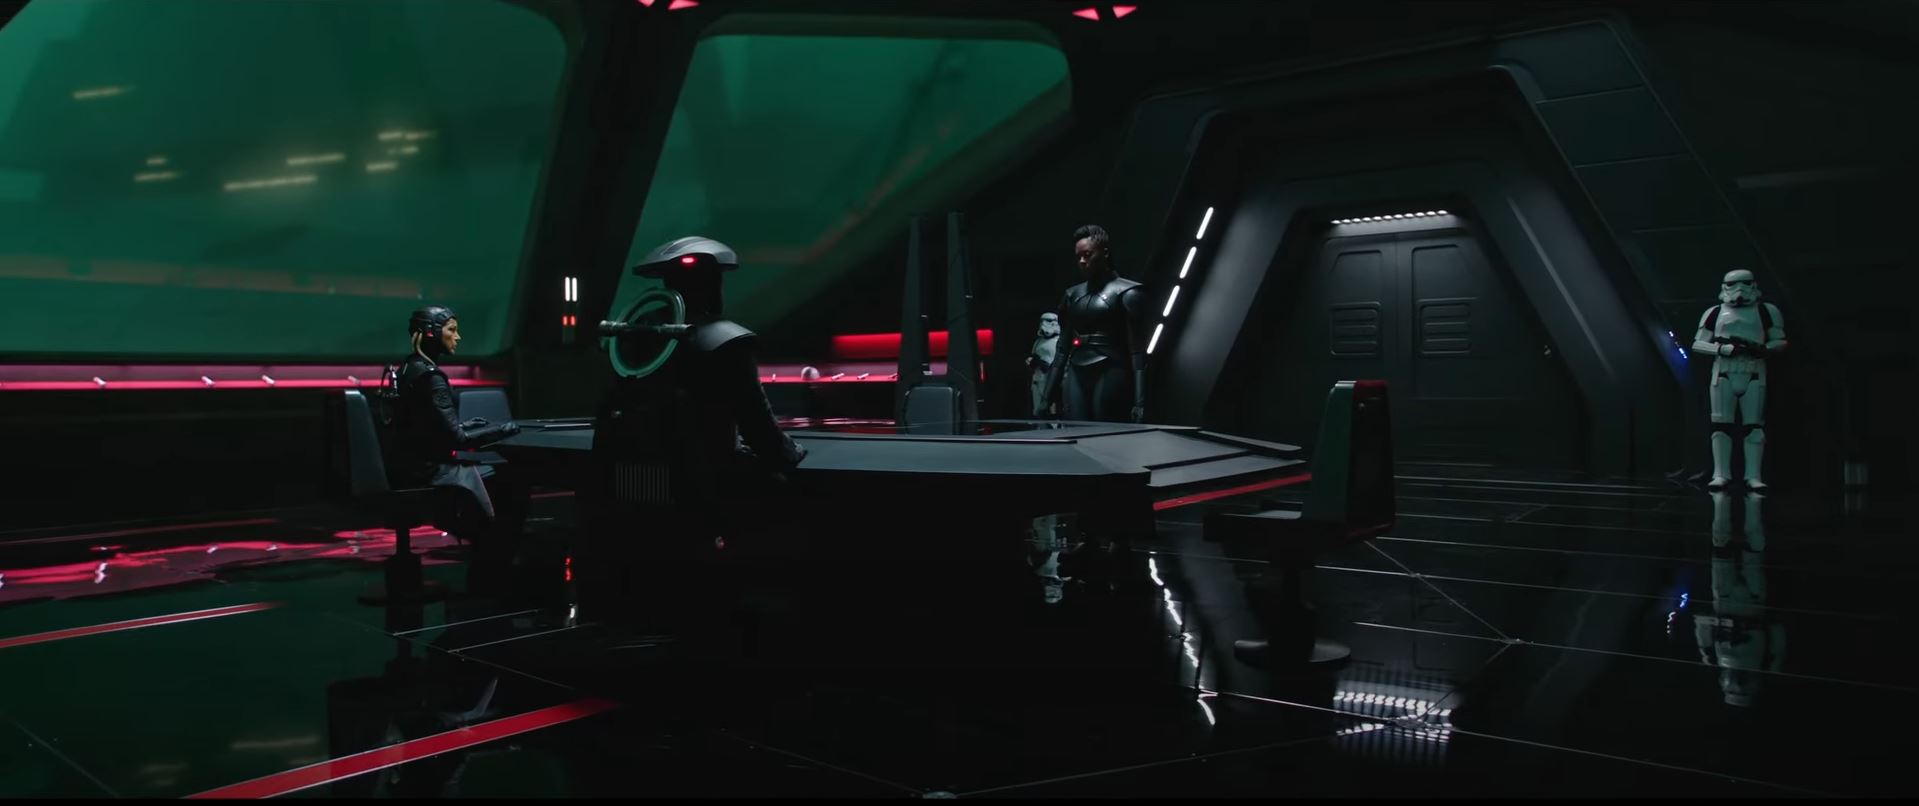 Megastar Wars: Obi-Wan Kenobi revelará os “horrores” do Império